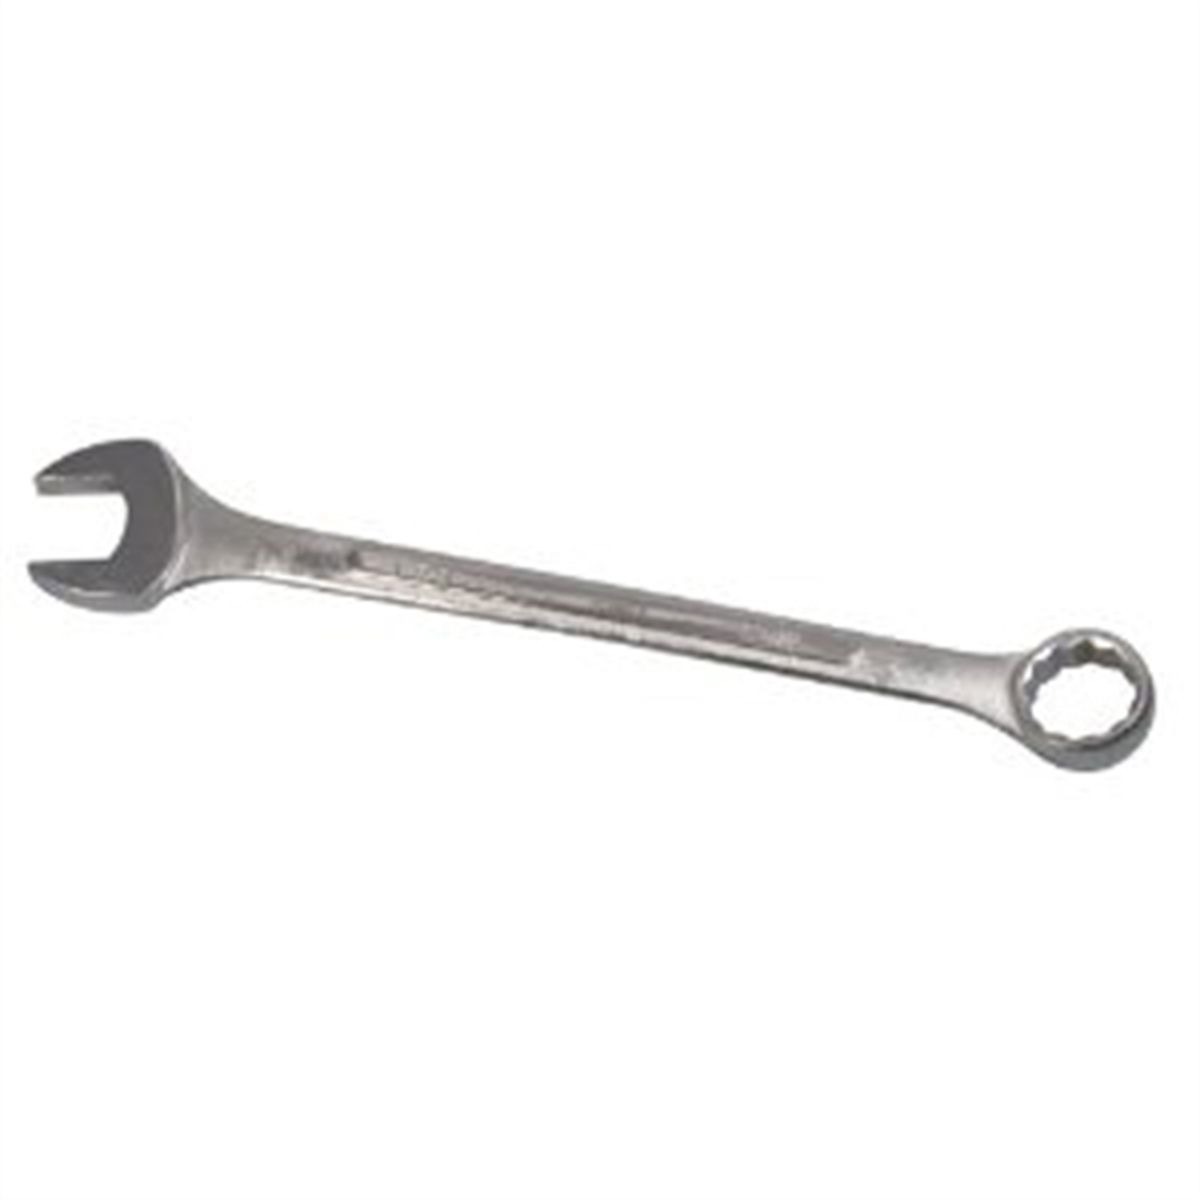 Jumbo SAE Combination Wrench - 1-7/8 In